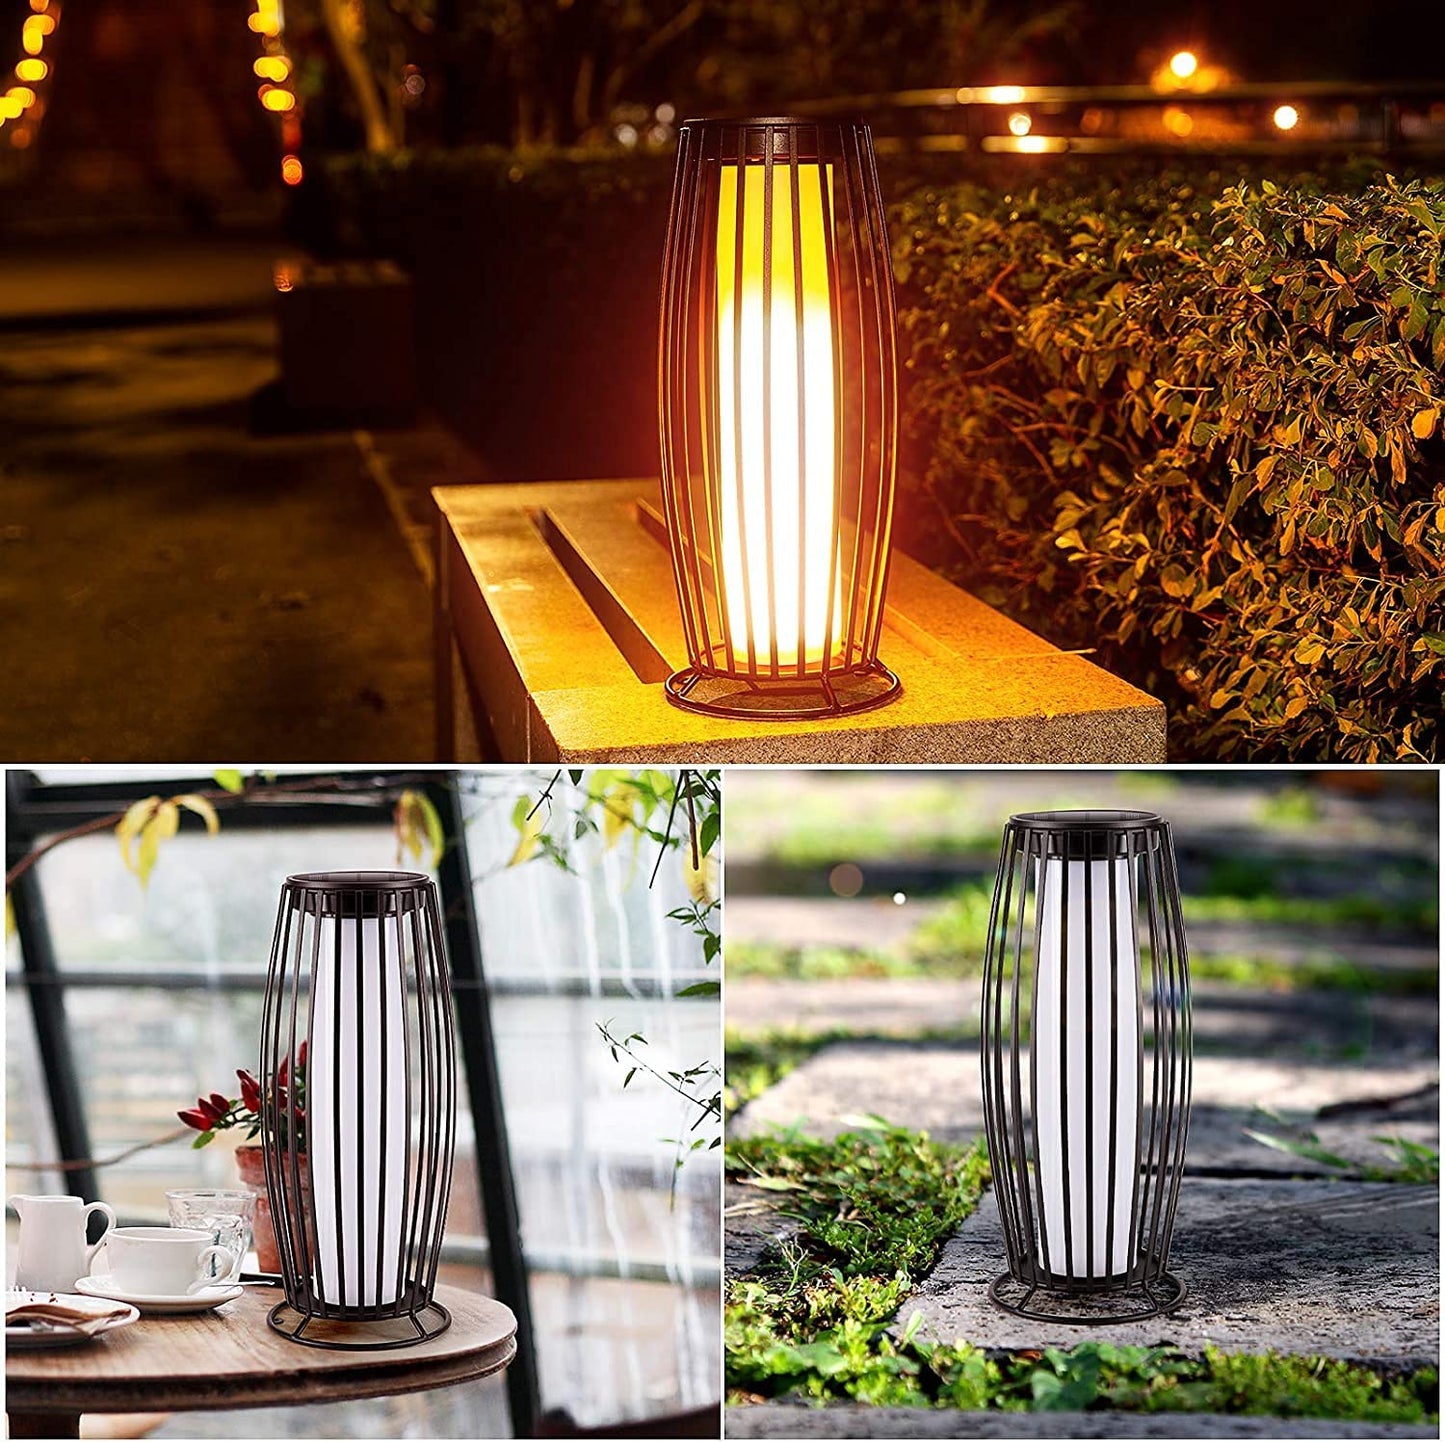 Nenrent Solar Lantern Outdoor Floor Lamp,Solar Powered/USB Charge,Solar Flickering Flame Lantern for Patio Garden Deck Porch Balcony Decoration,Waterproof&Super Long Endurance(1 Pack)